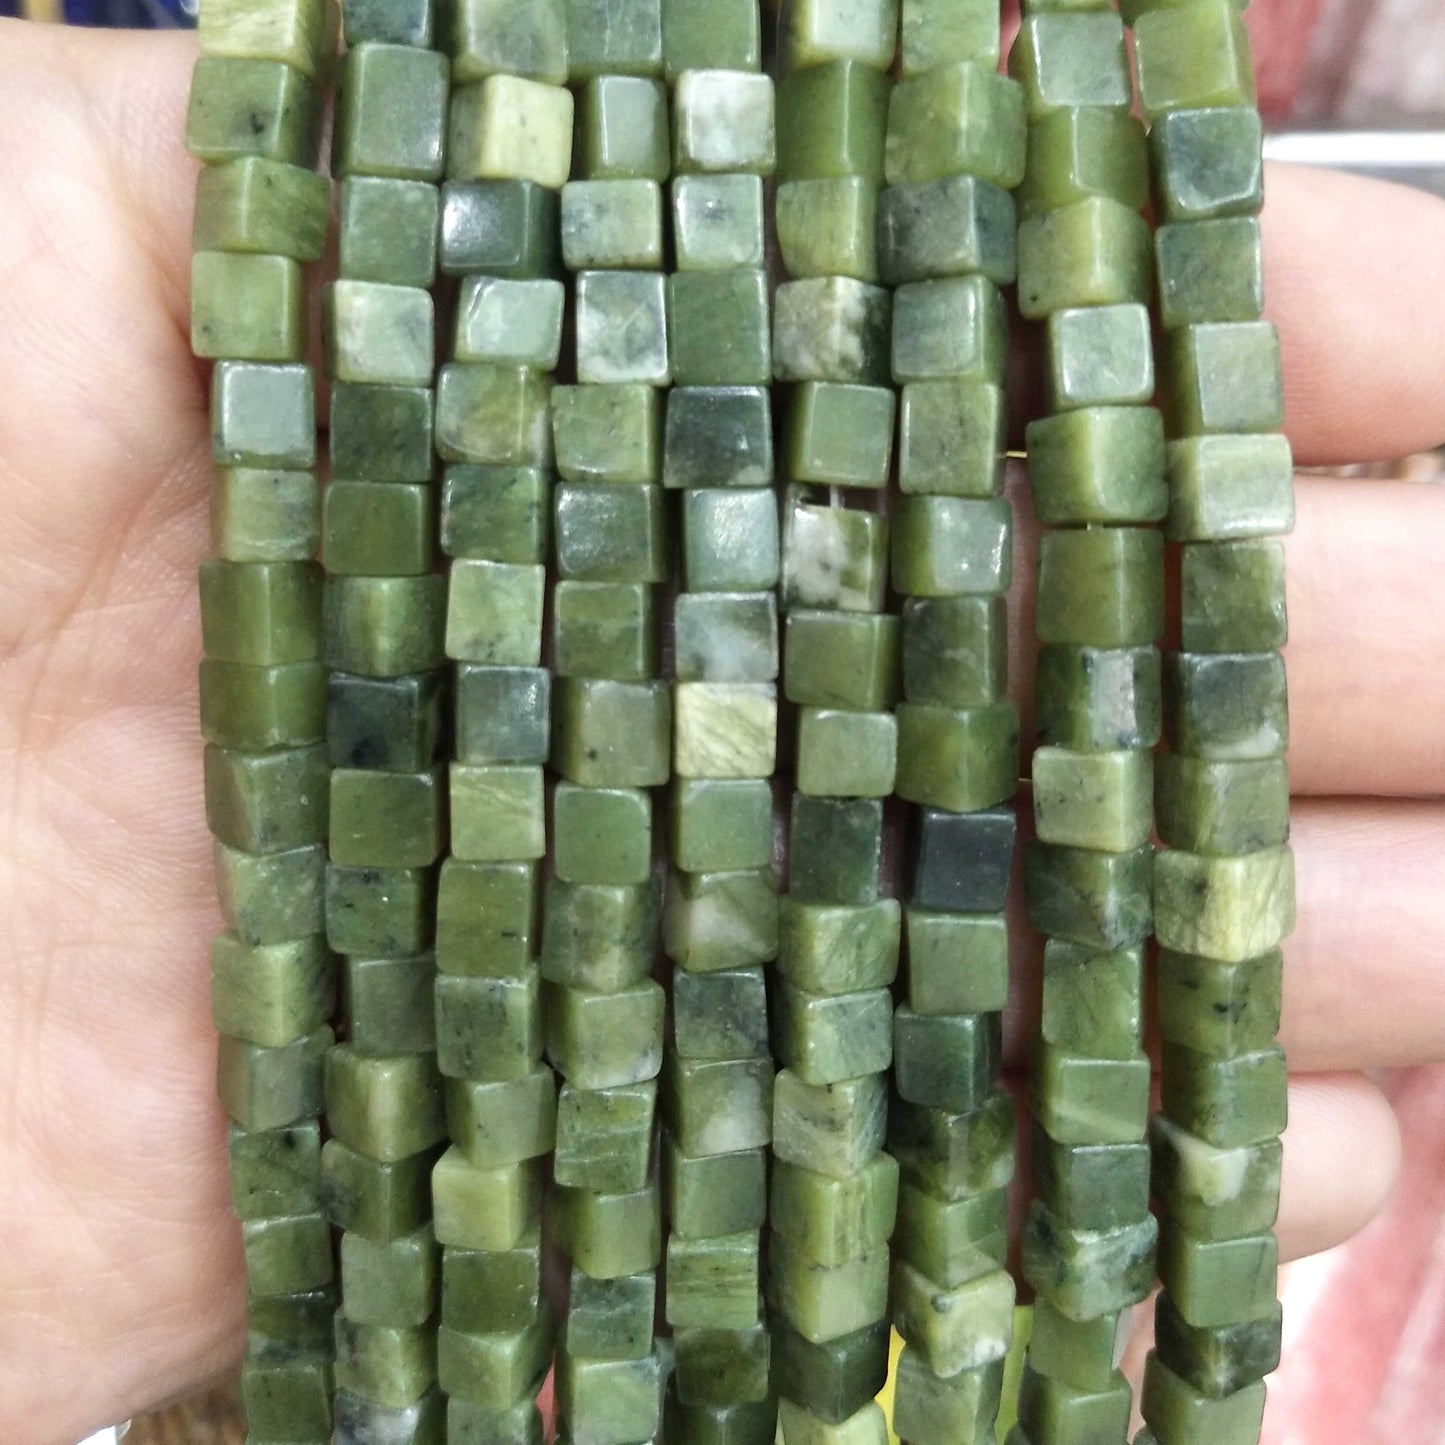 Square Pink Crystal Quartz Agates Jades